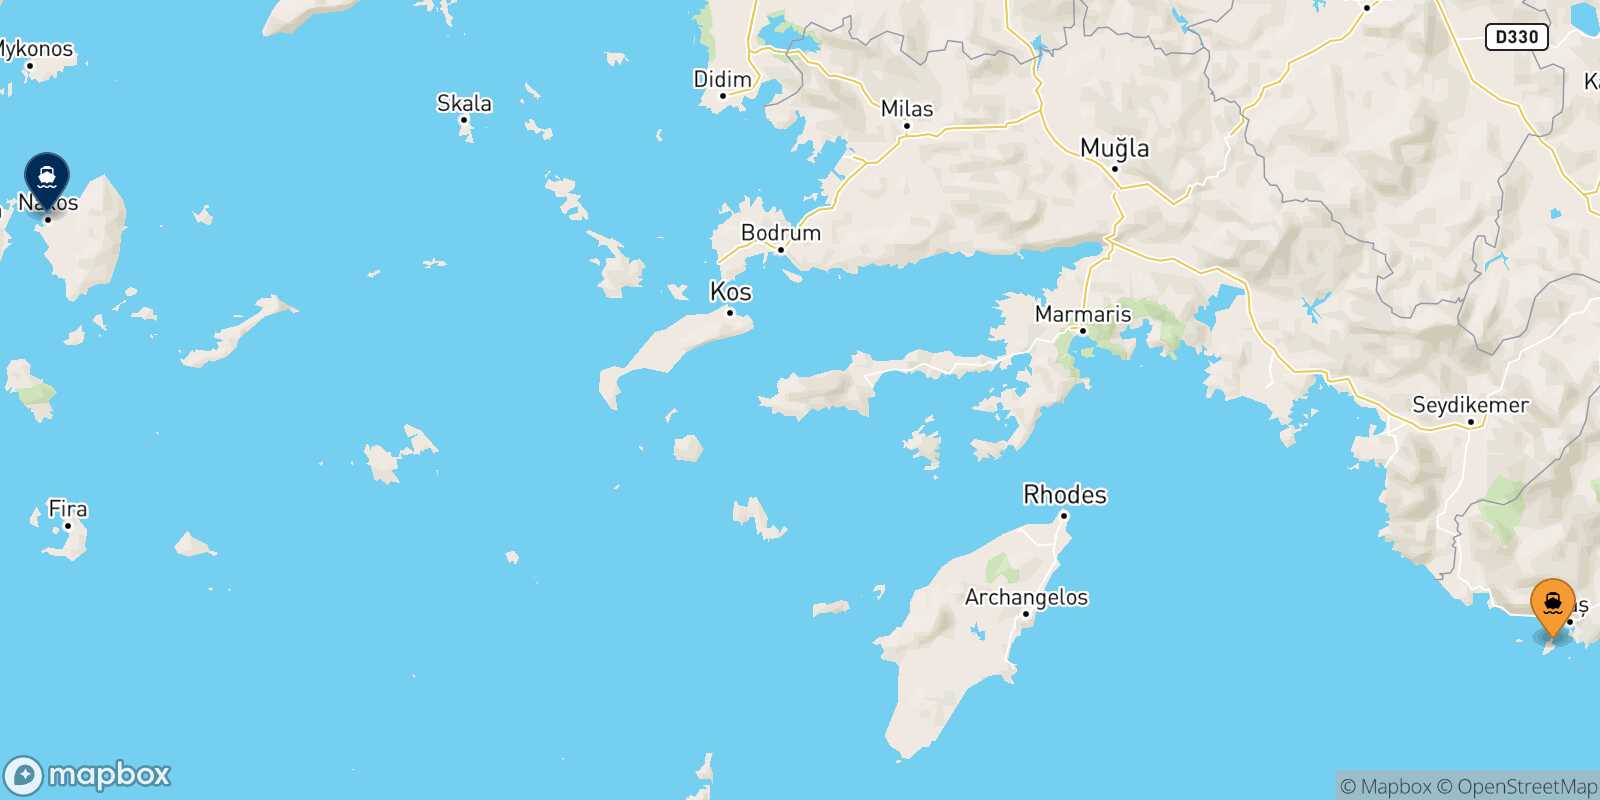 Kastelorizo Naxos route map